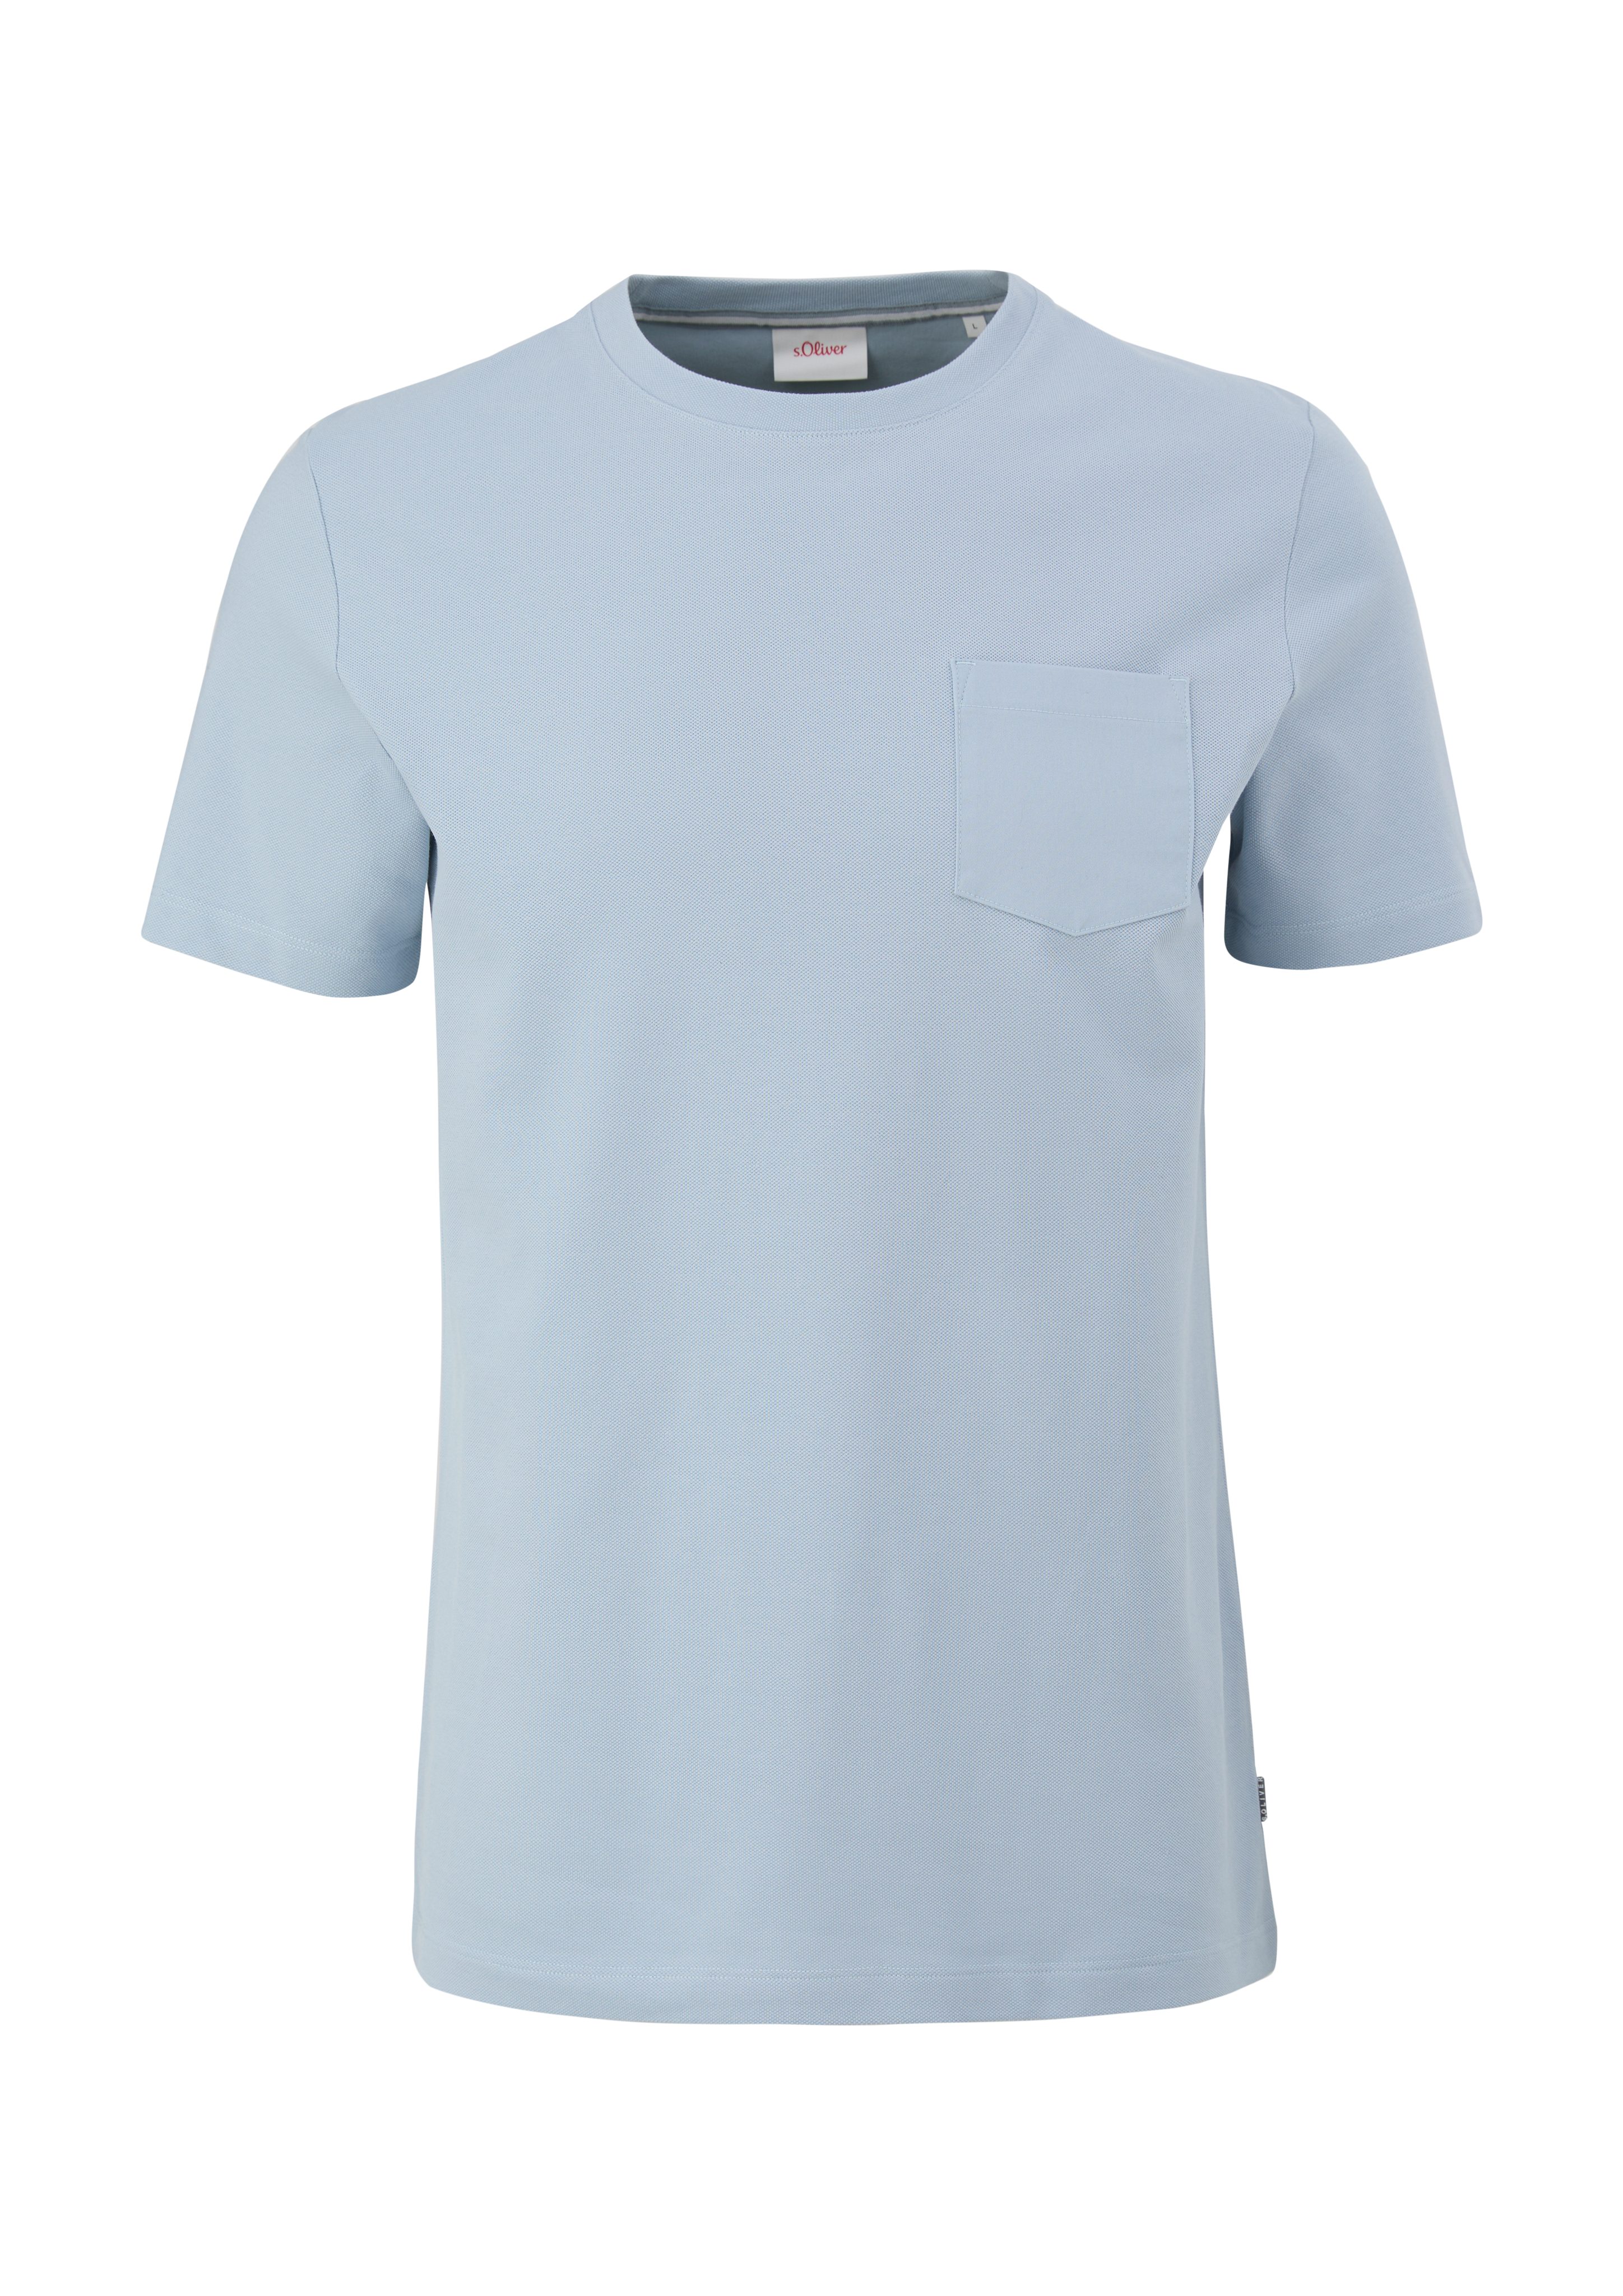 s.Oliver Piqué-Struktur Kurzarmshirt hellblau mit T-Shirt